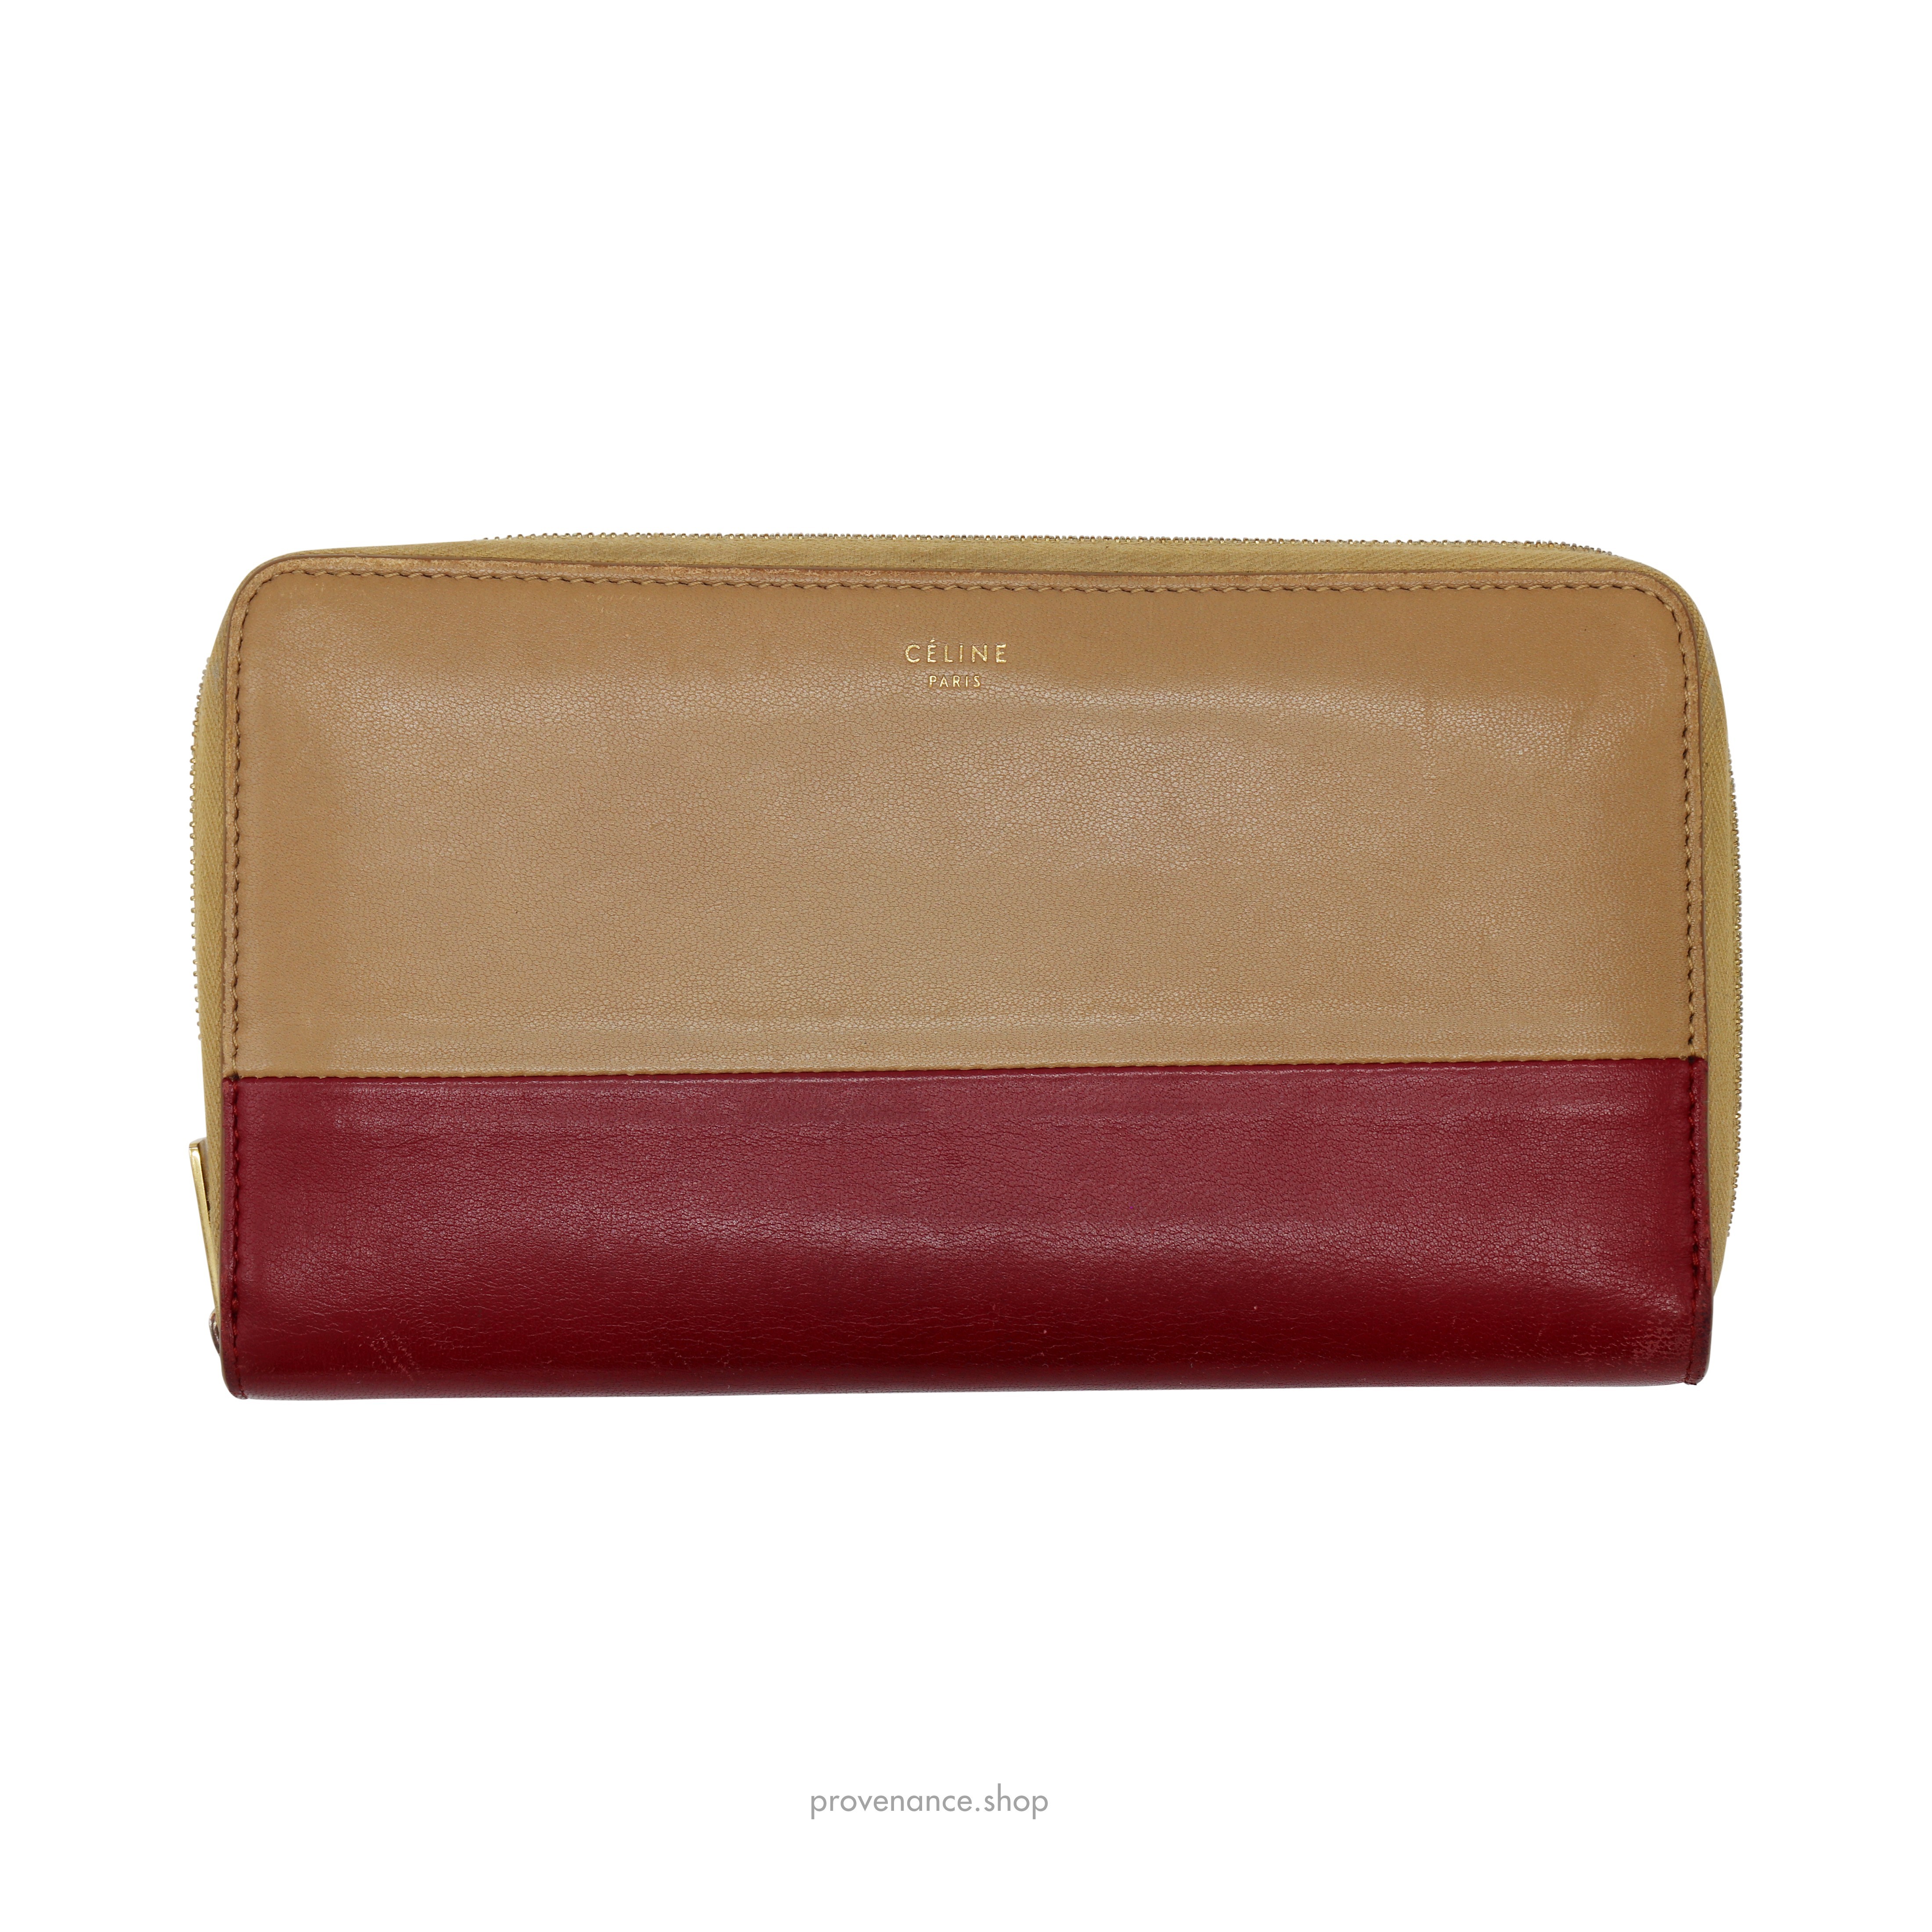 Celine Multifunction Zip Wallet - Tan/Red - 1